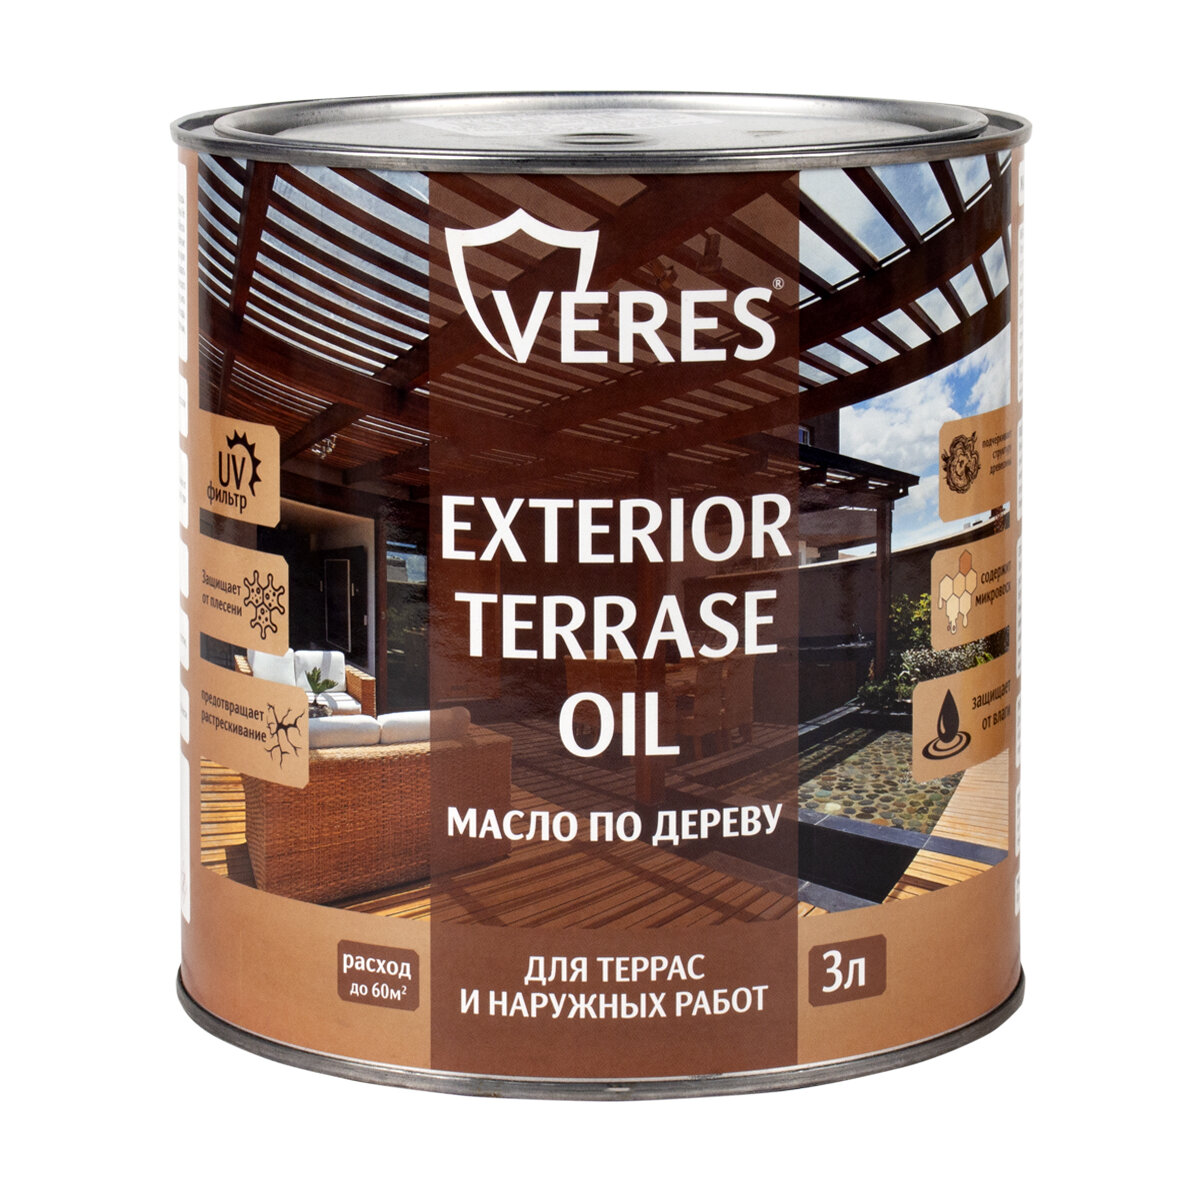 Масло для дерева Veres Exterior Terrase Oil 3 л дуб